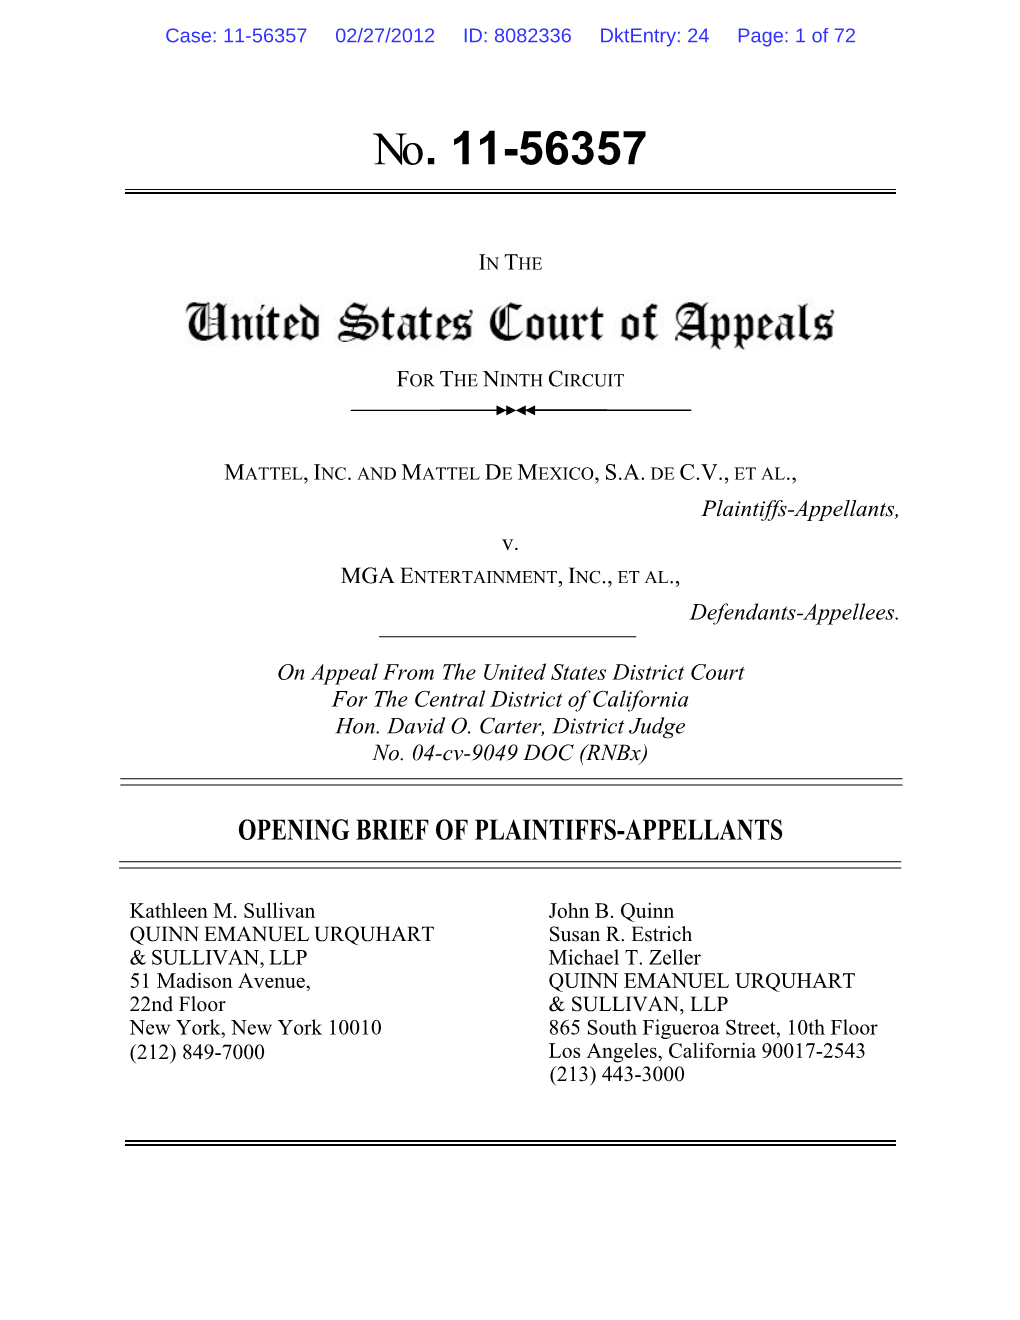 Opening Brief of Plaintiffs-Appellants